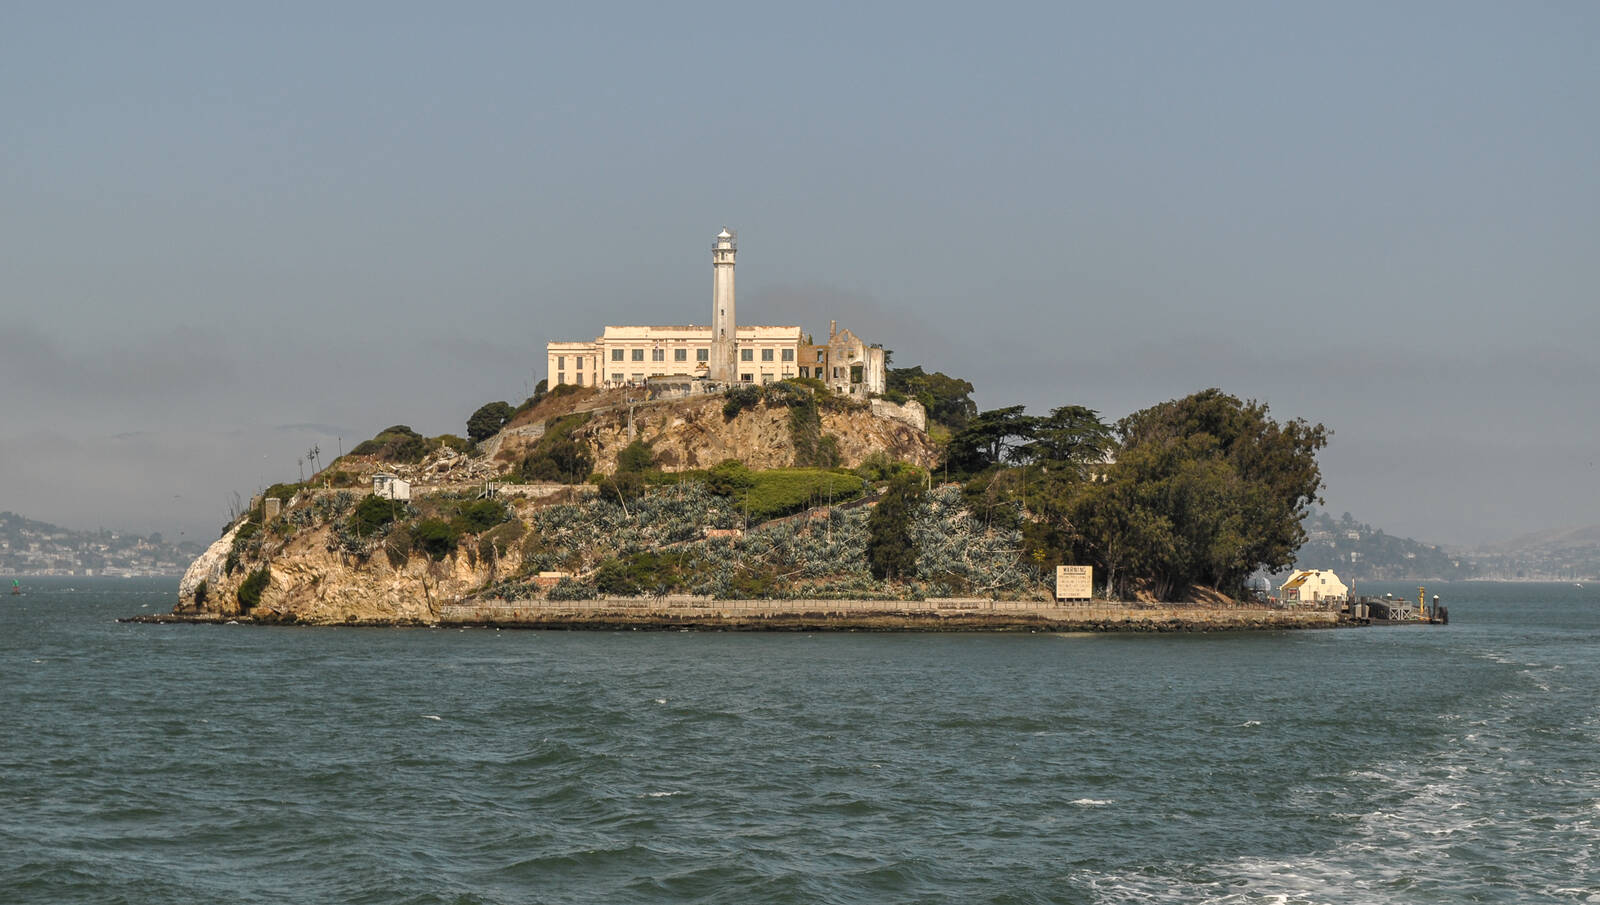 Image of Alcatraz Island by Peter Haargaard